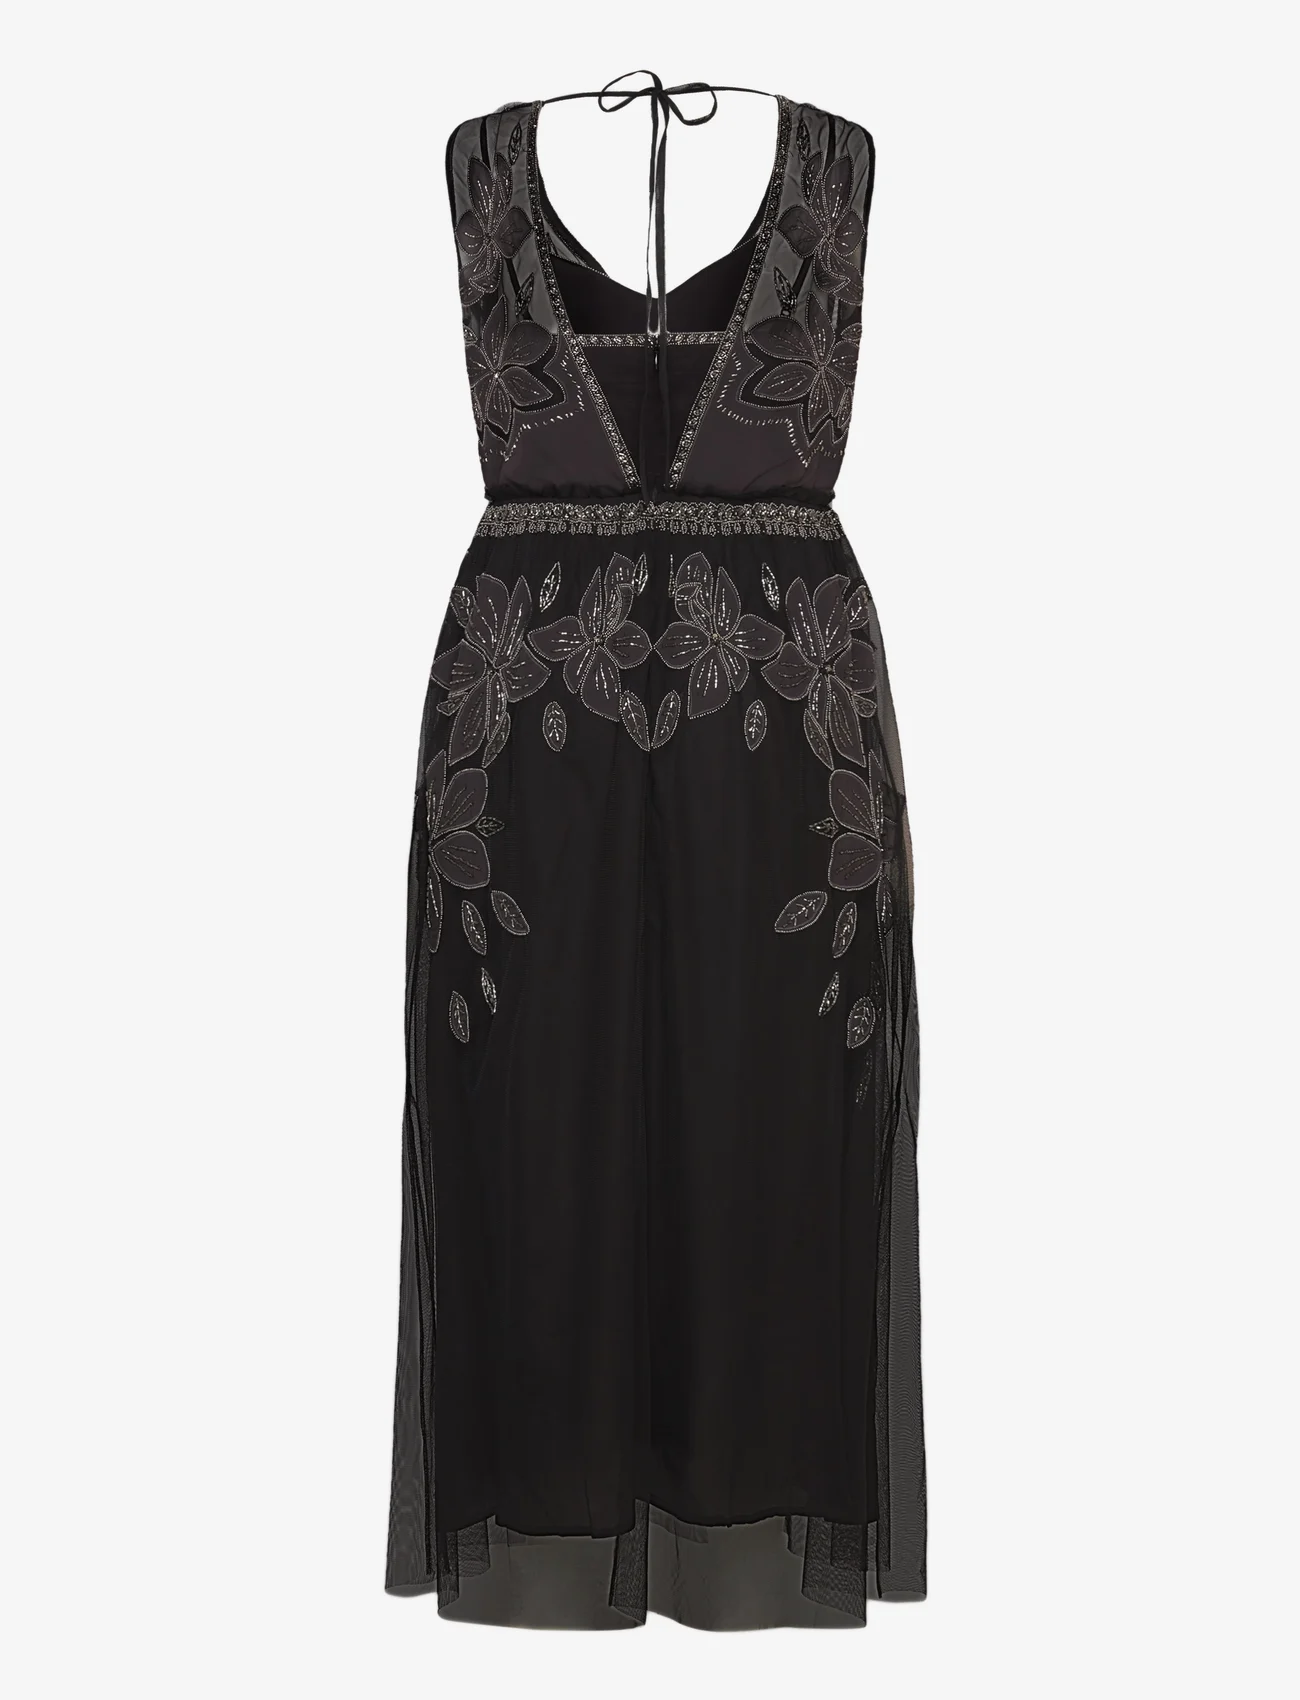 AllSaints - LAIA EMB DRESS - midi kjoler - black - 1